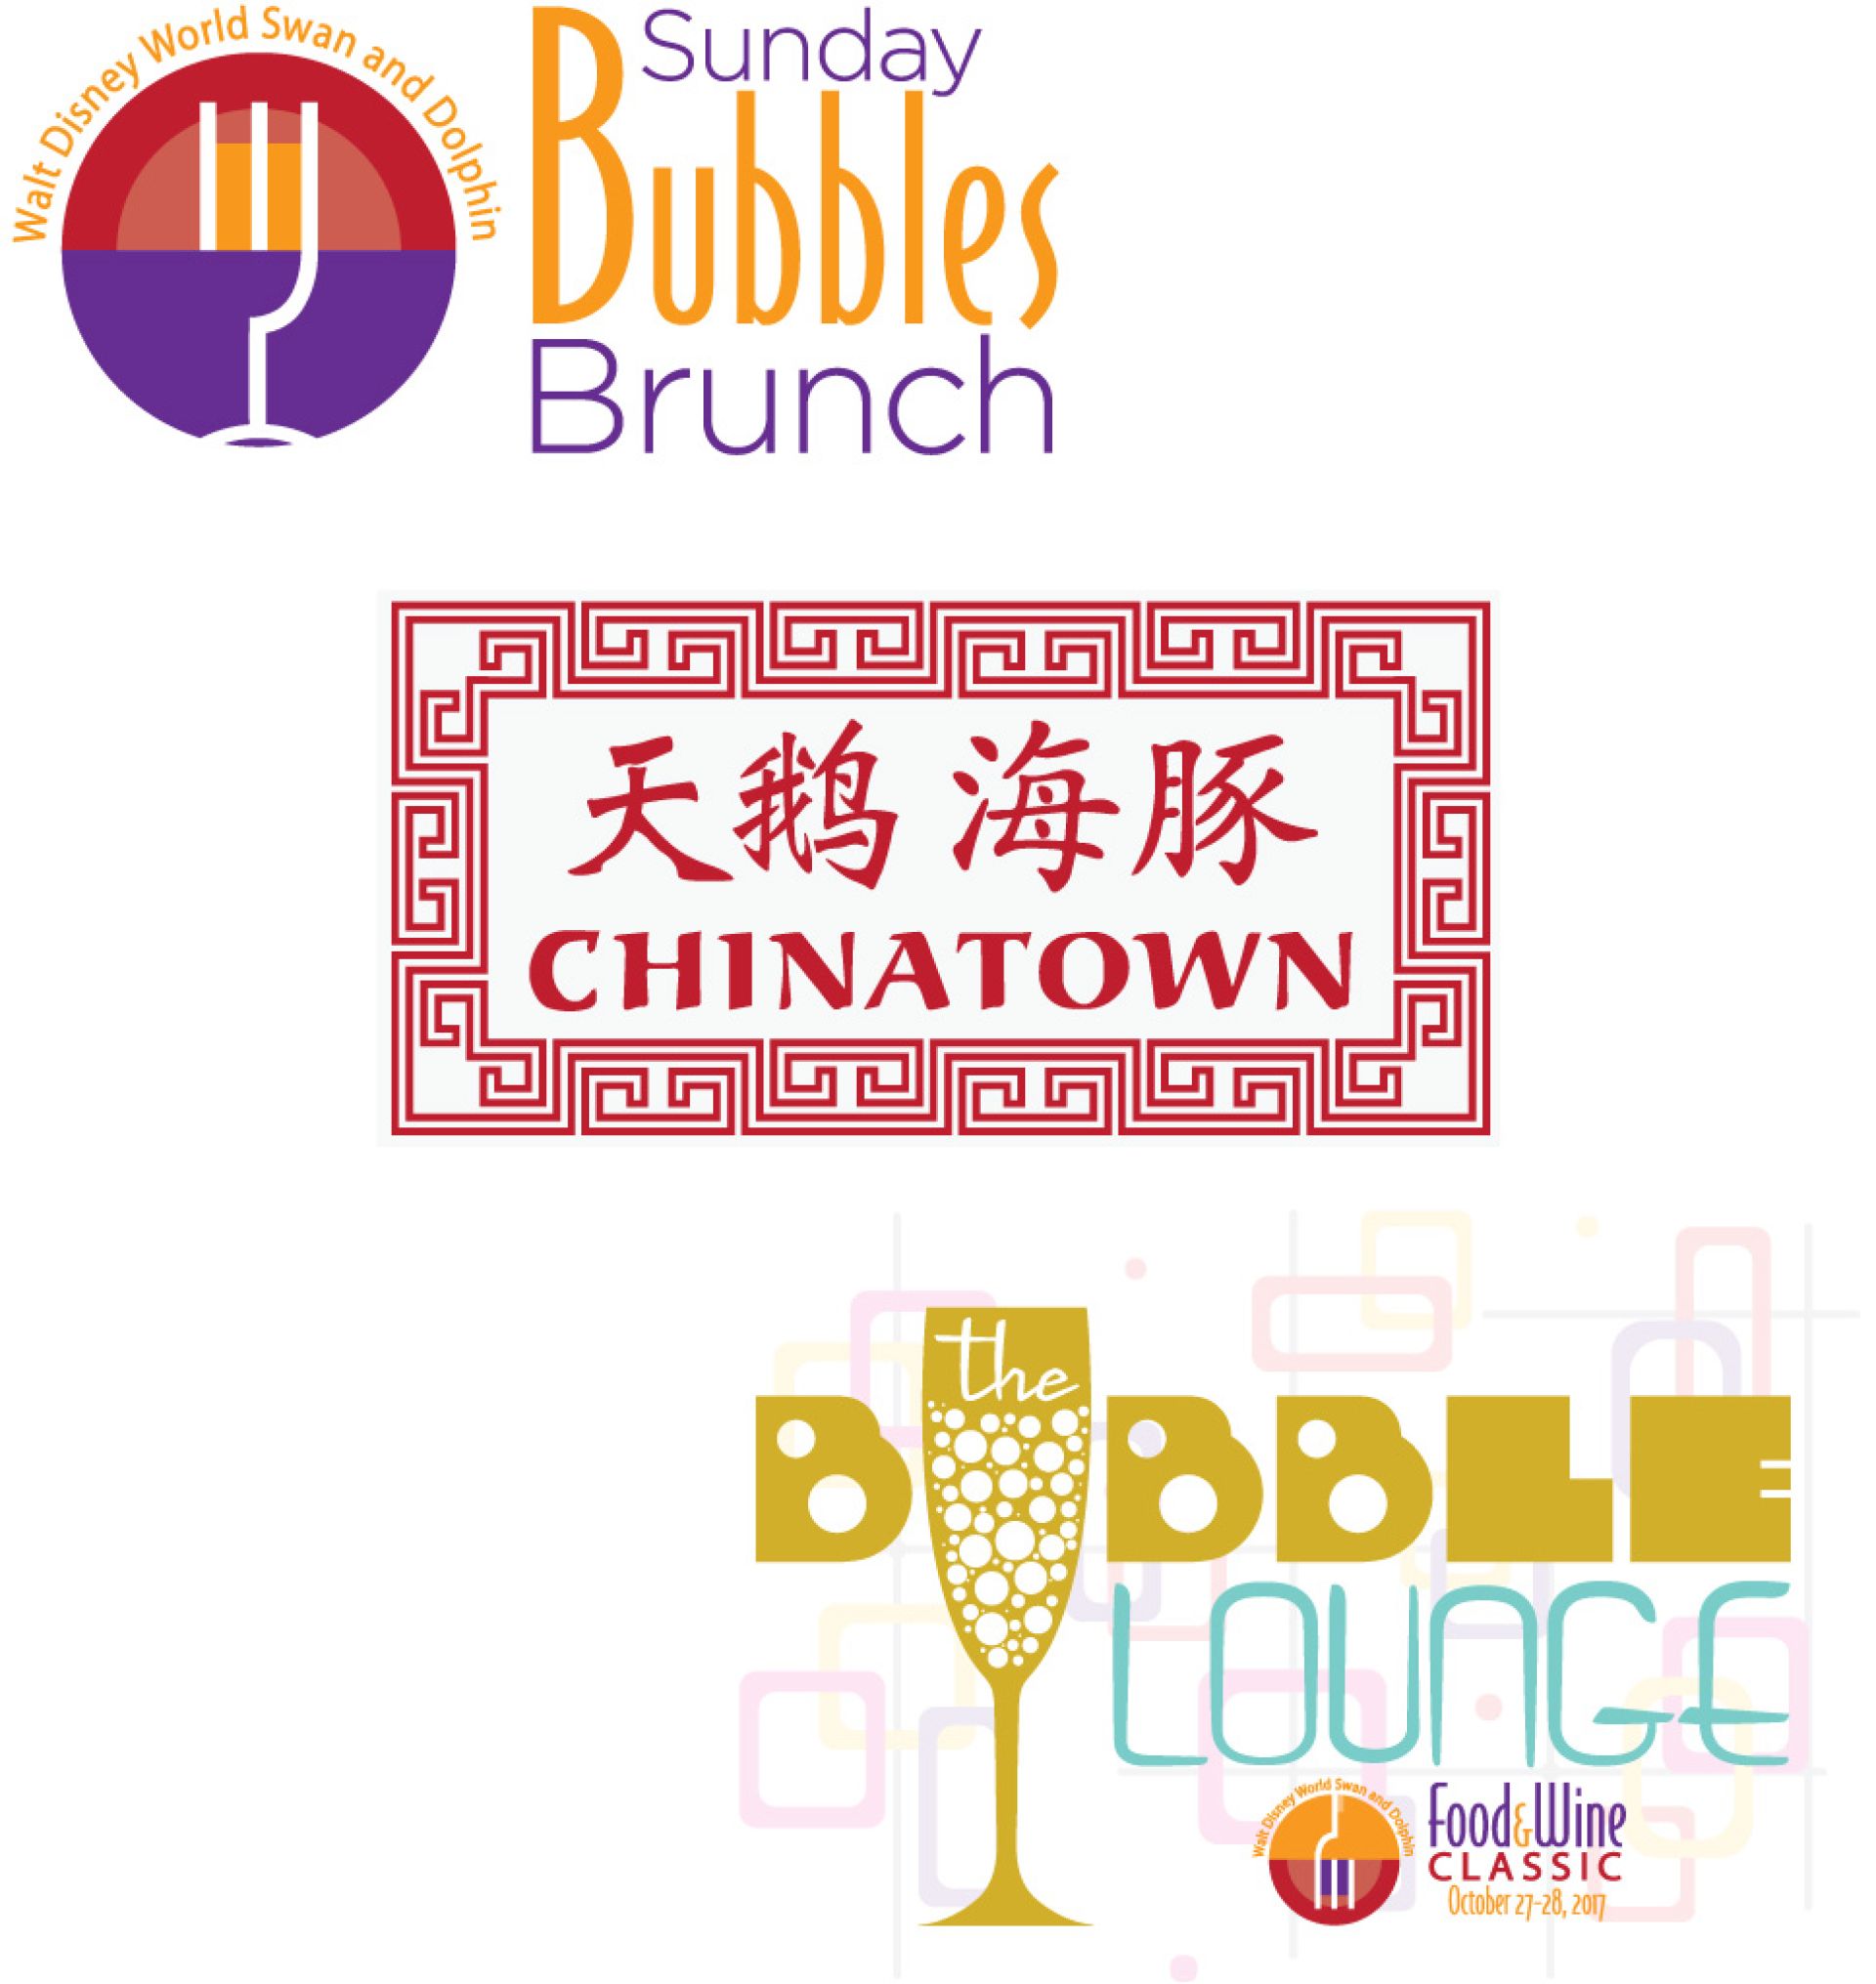 sunday bubbles brunch, chinatown, the bubble lounge logos